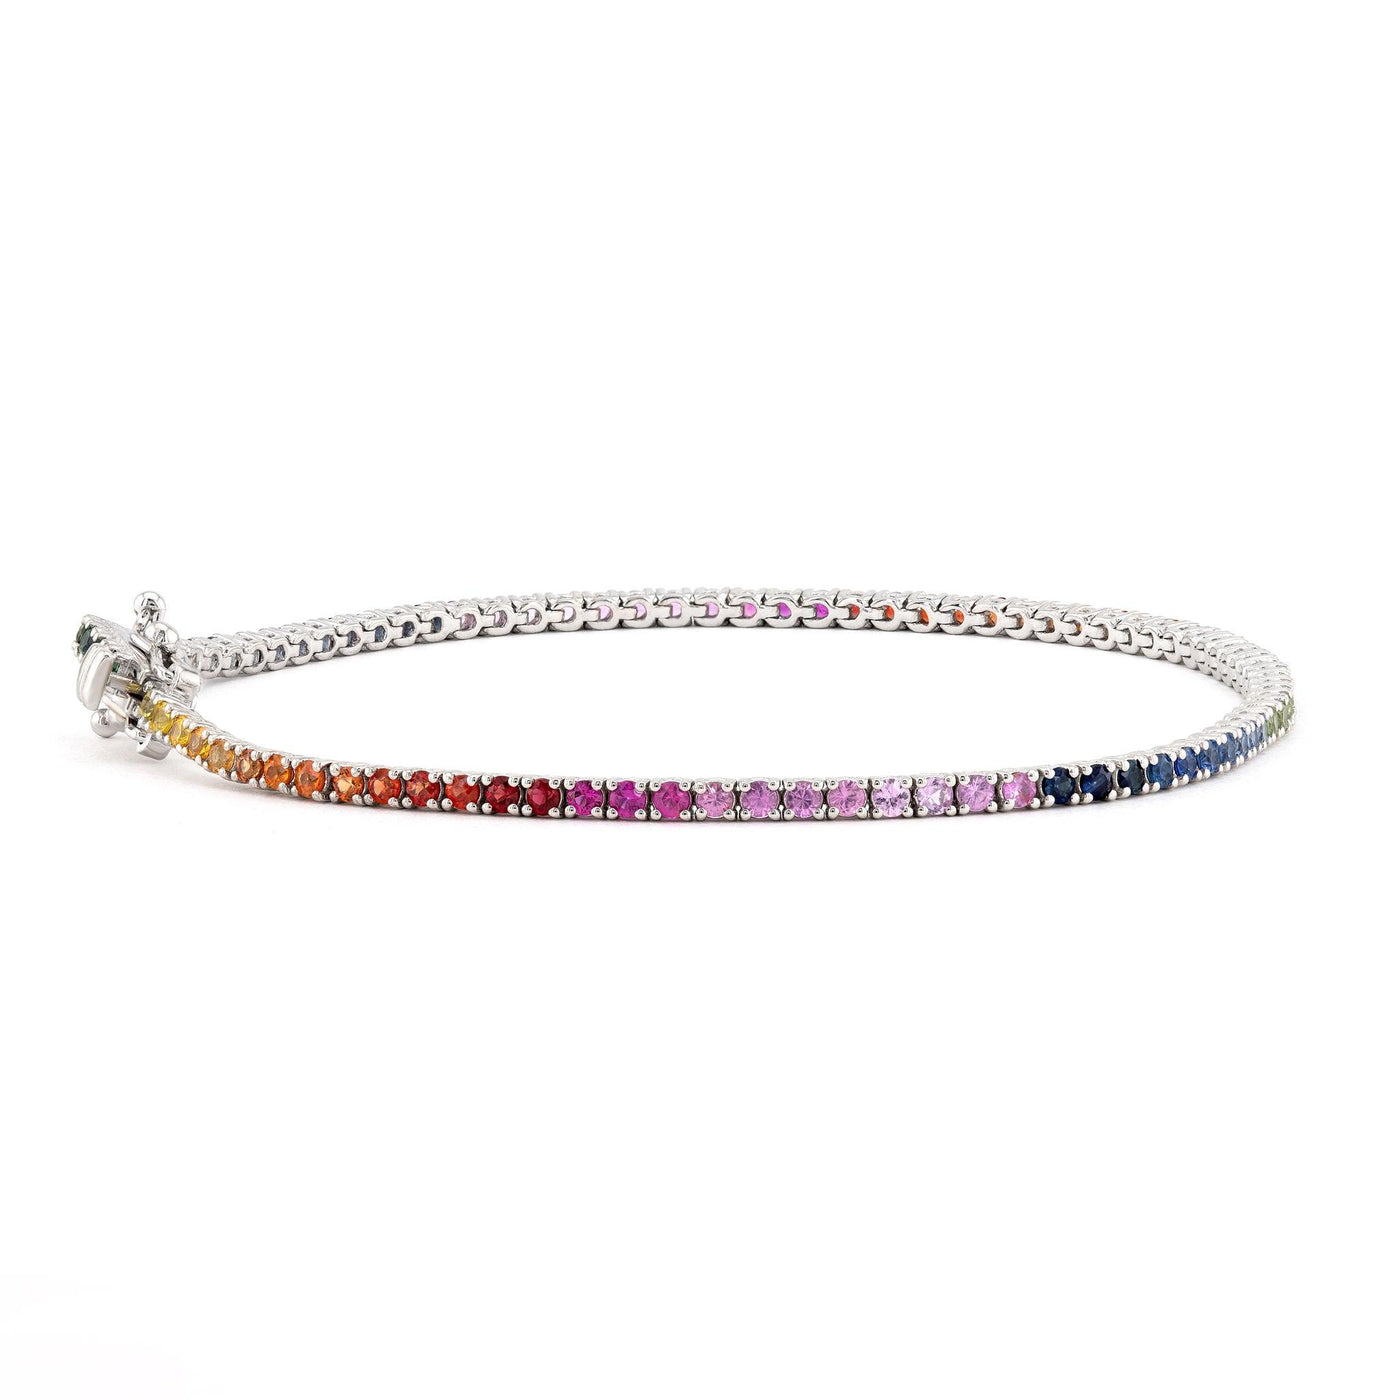 Natural rainbow sapphire byzantine chain bracelet Men's bracelet Women's bracelet